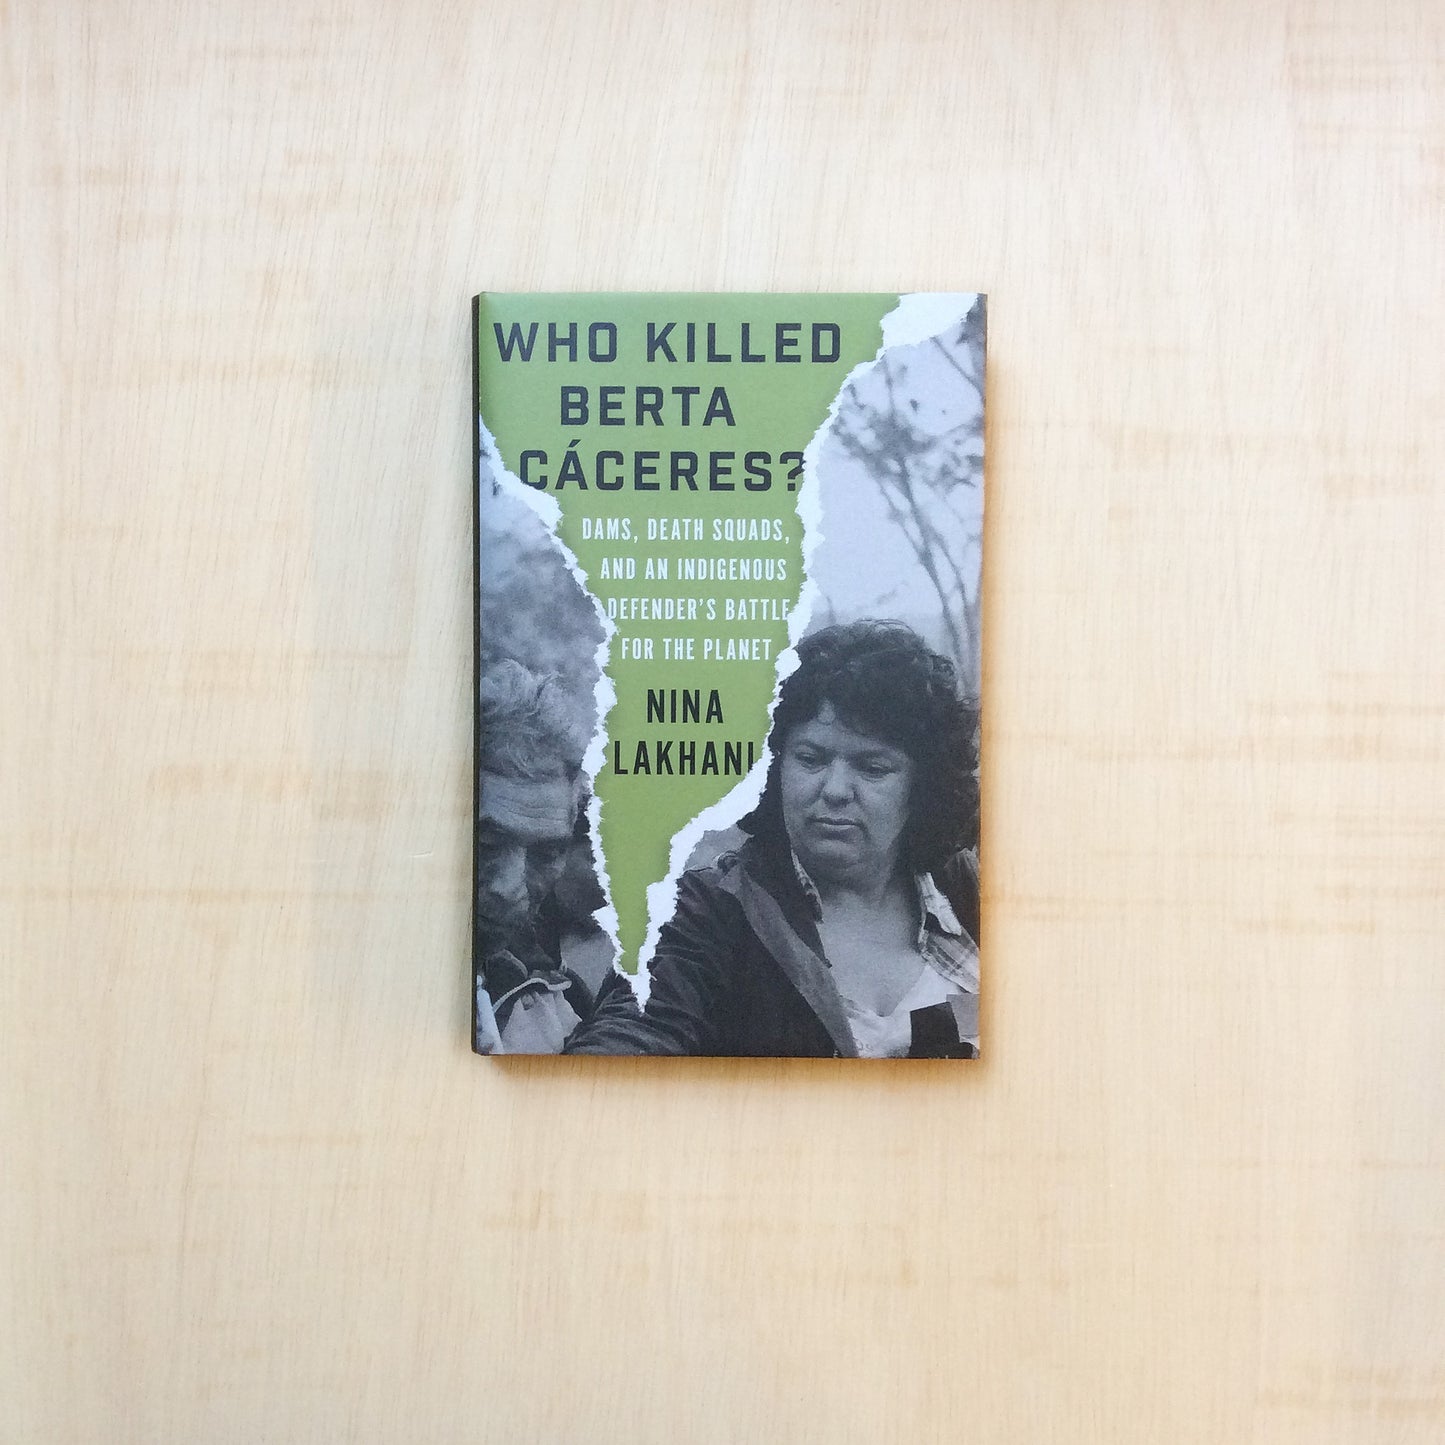 Who Killed Berta Cáceres?